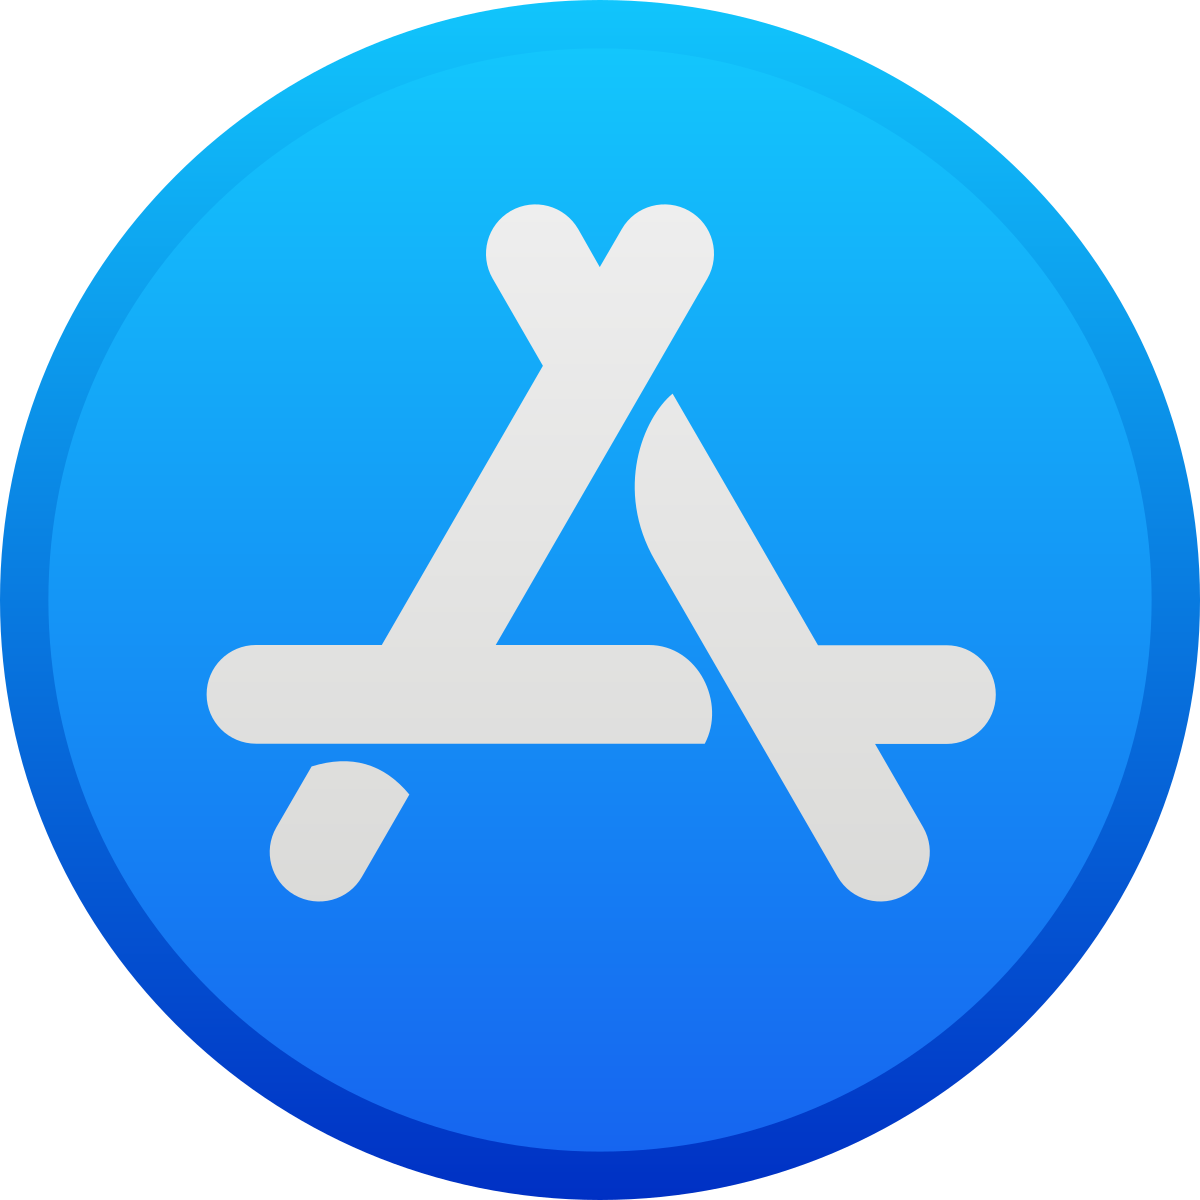 App Store (macOS) - Wikipedia, la enciclopedia libre